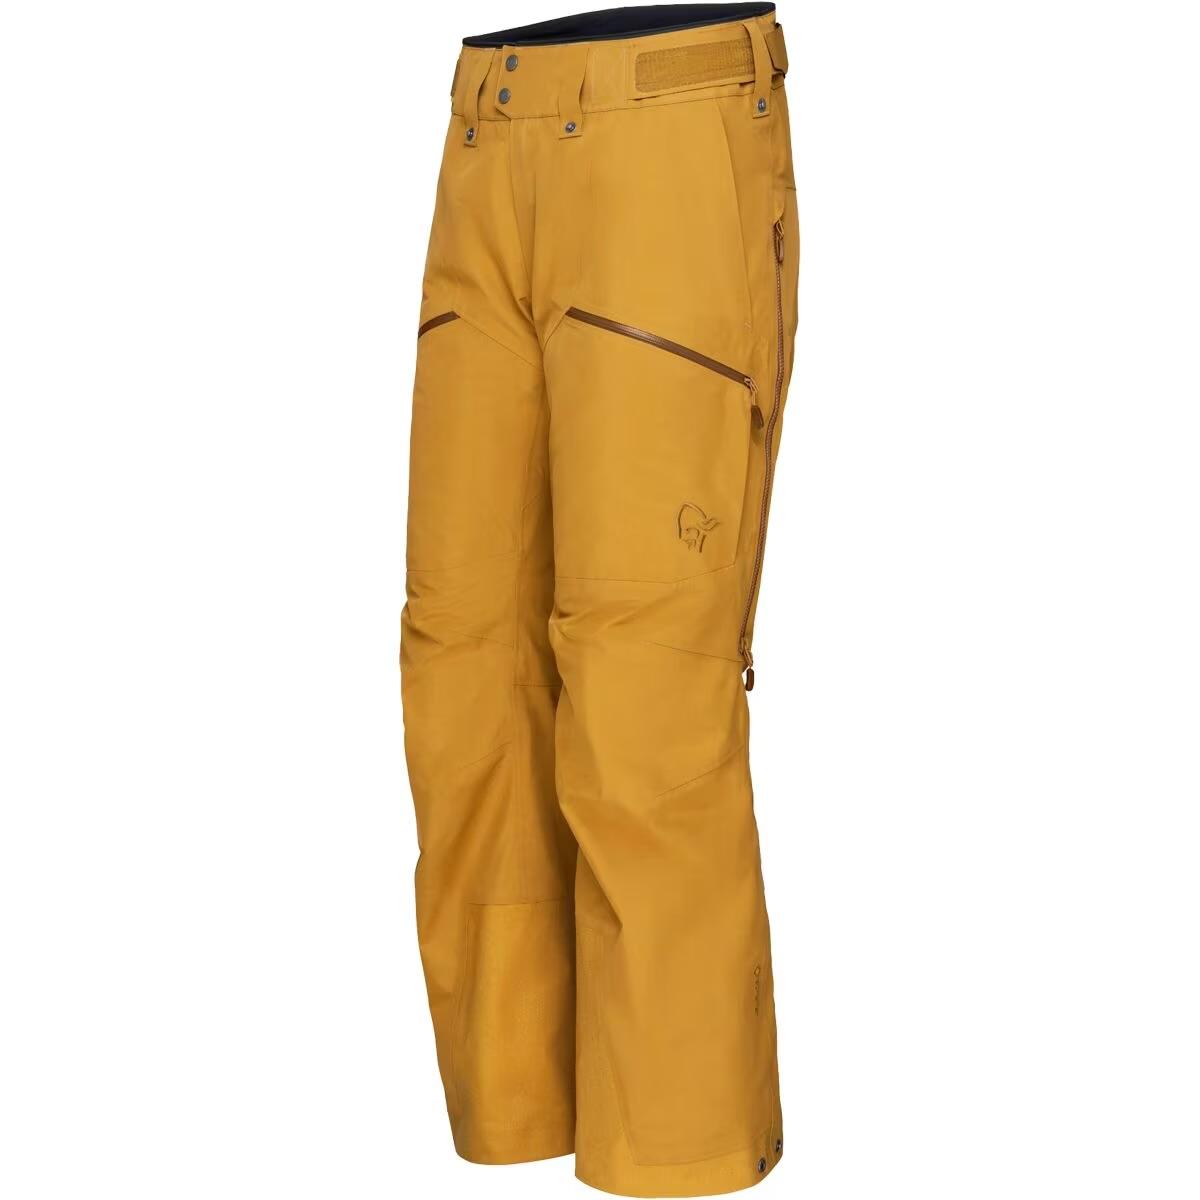 Norrona Tamok 3L Gore-Tex pants, Men’s Large